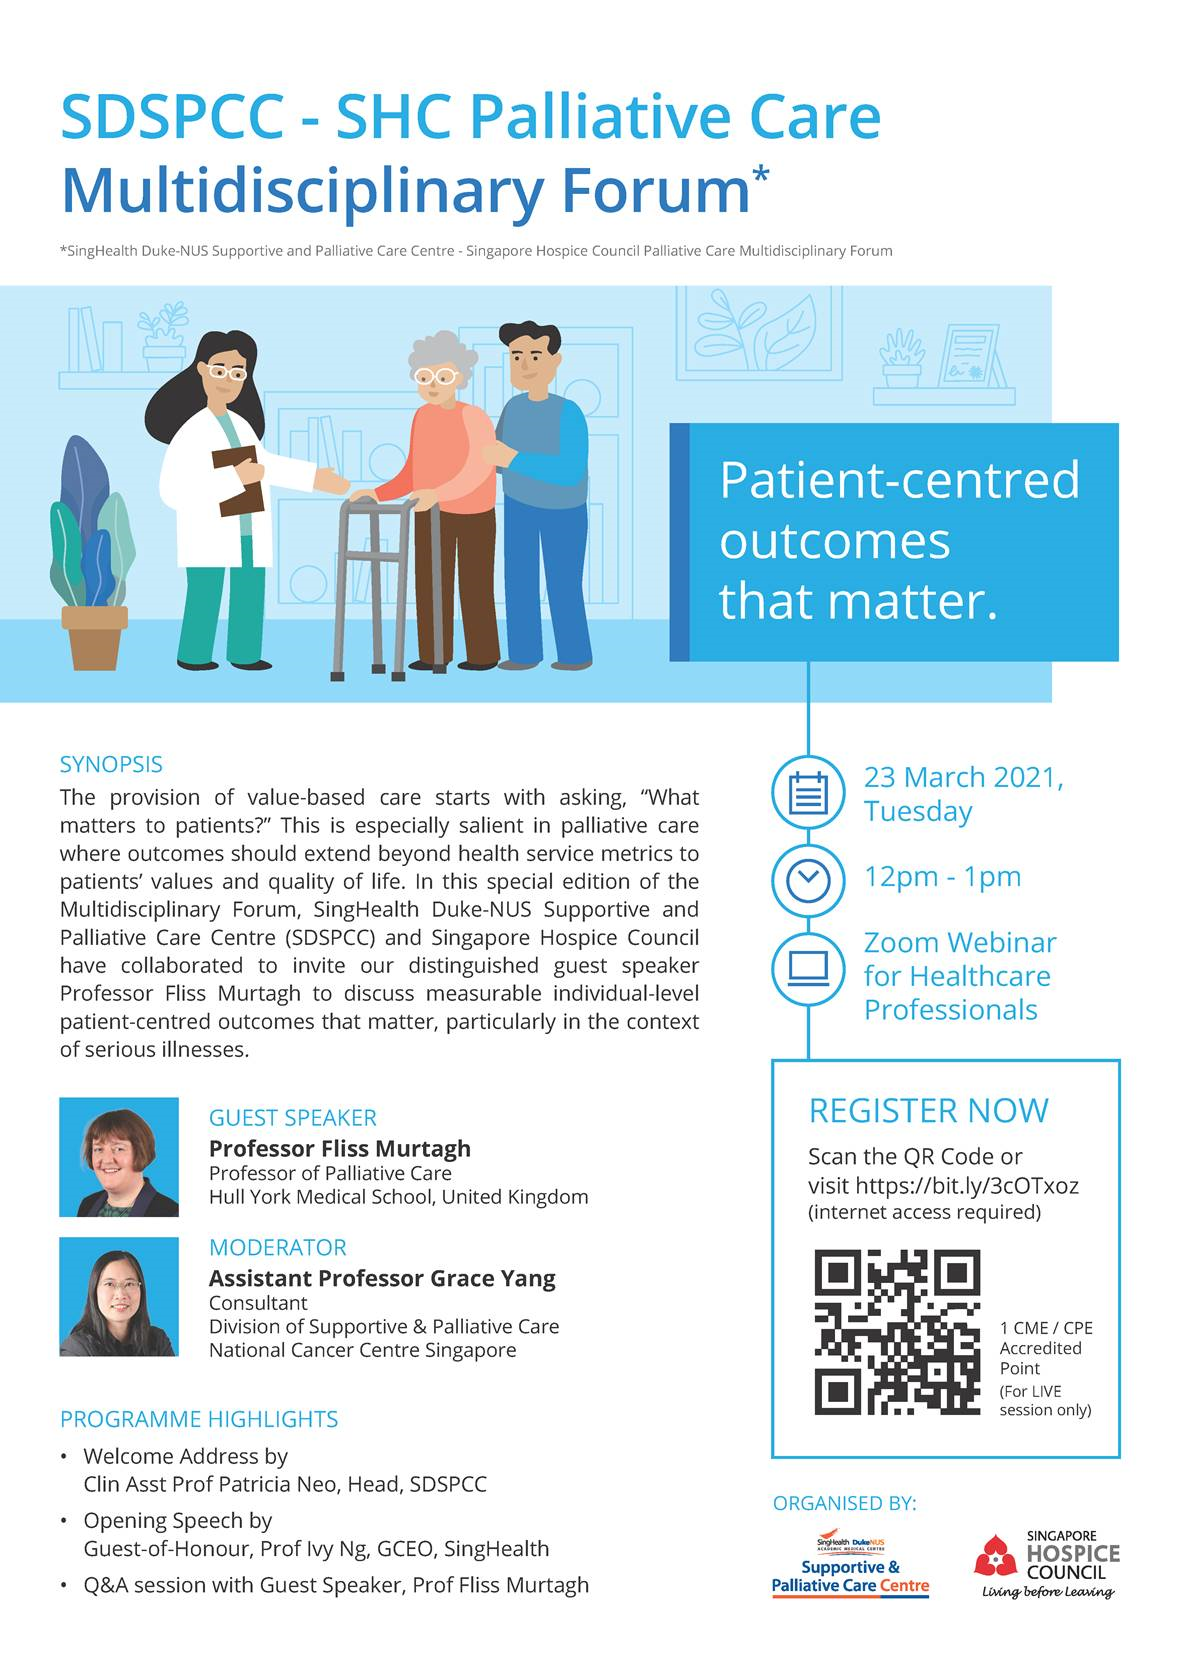 SDSPCC – SHC Palliative Care Multidisciplinary Forum